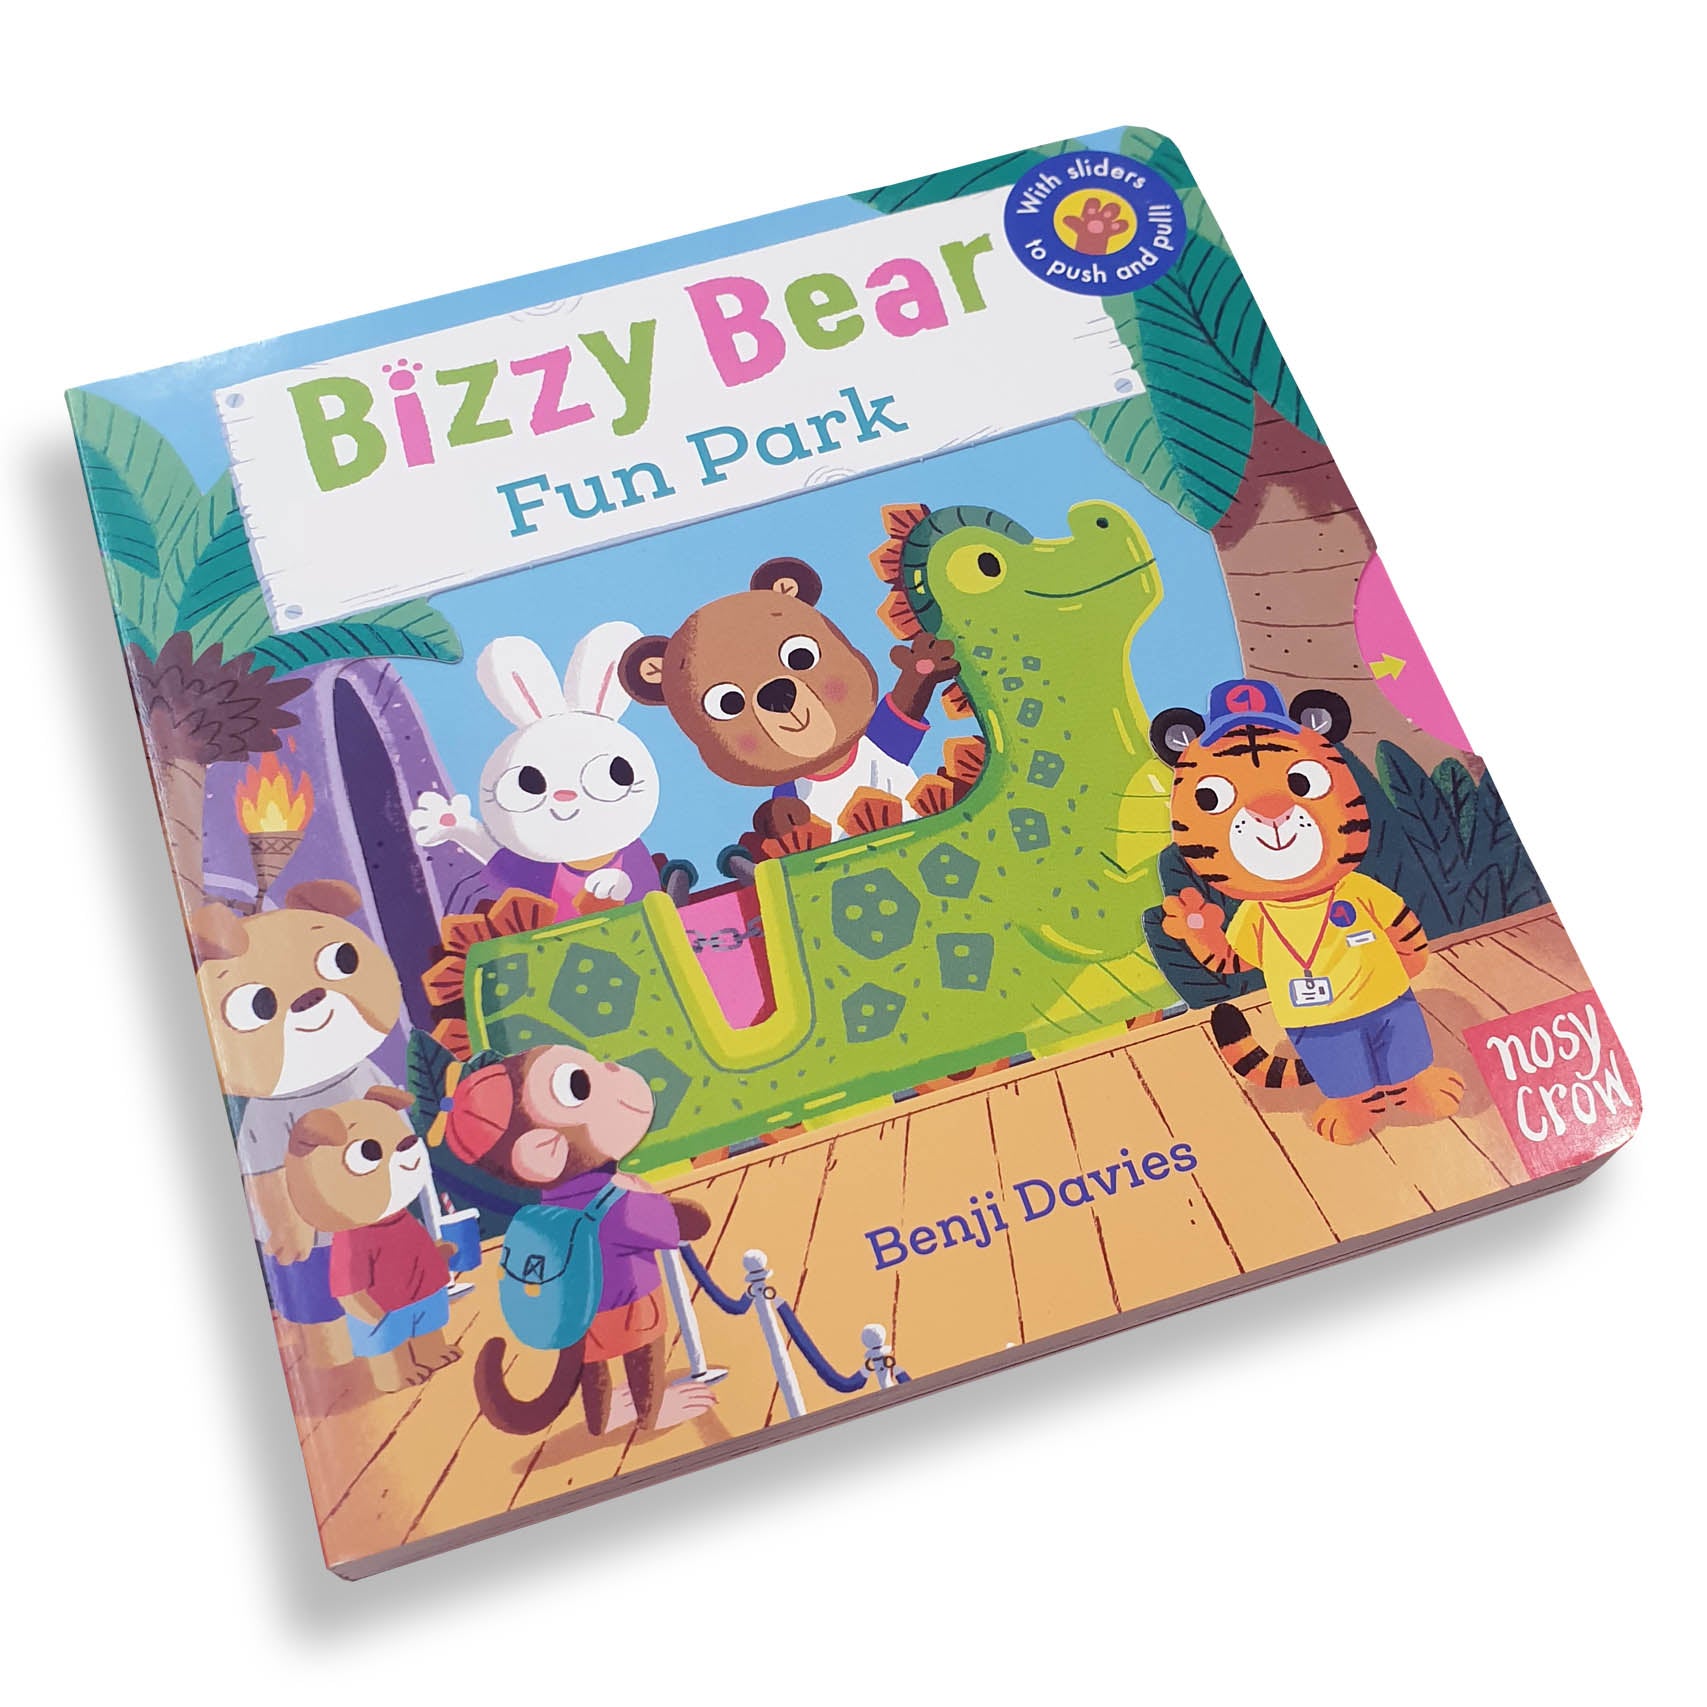 Bizzy Bear Fun Park - Deb's Hidden Treasures